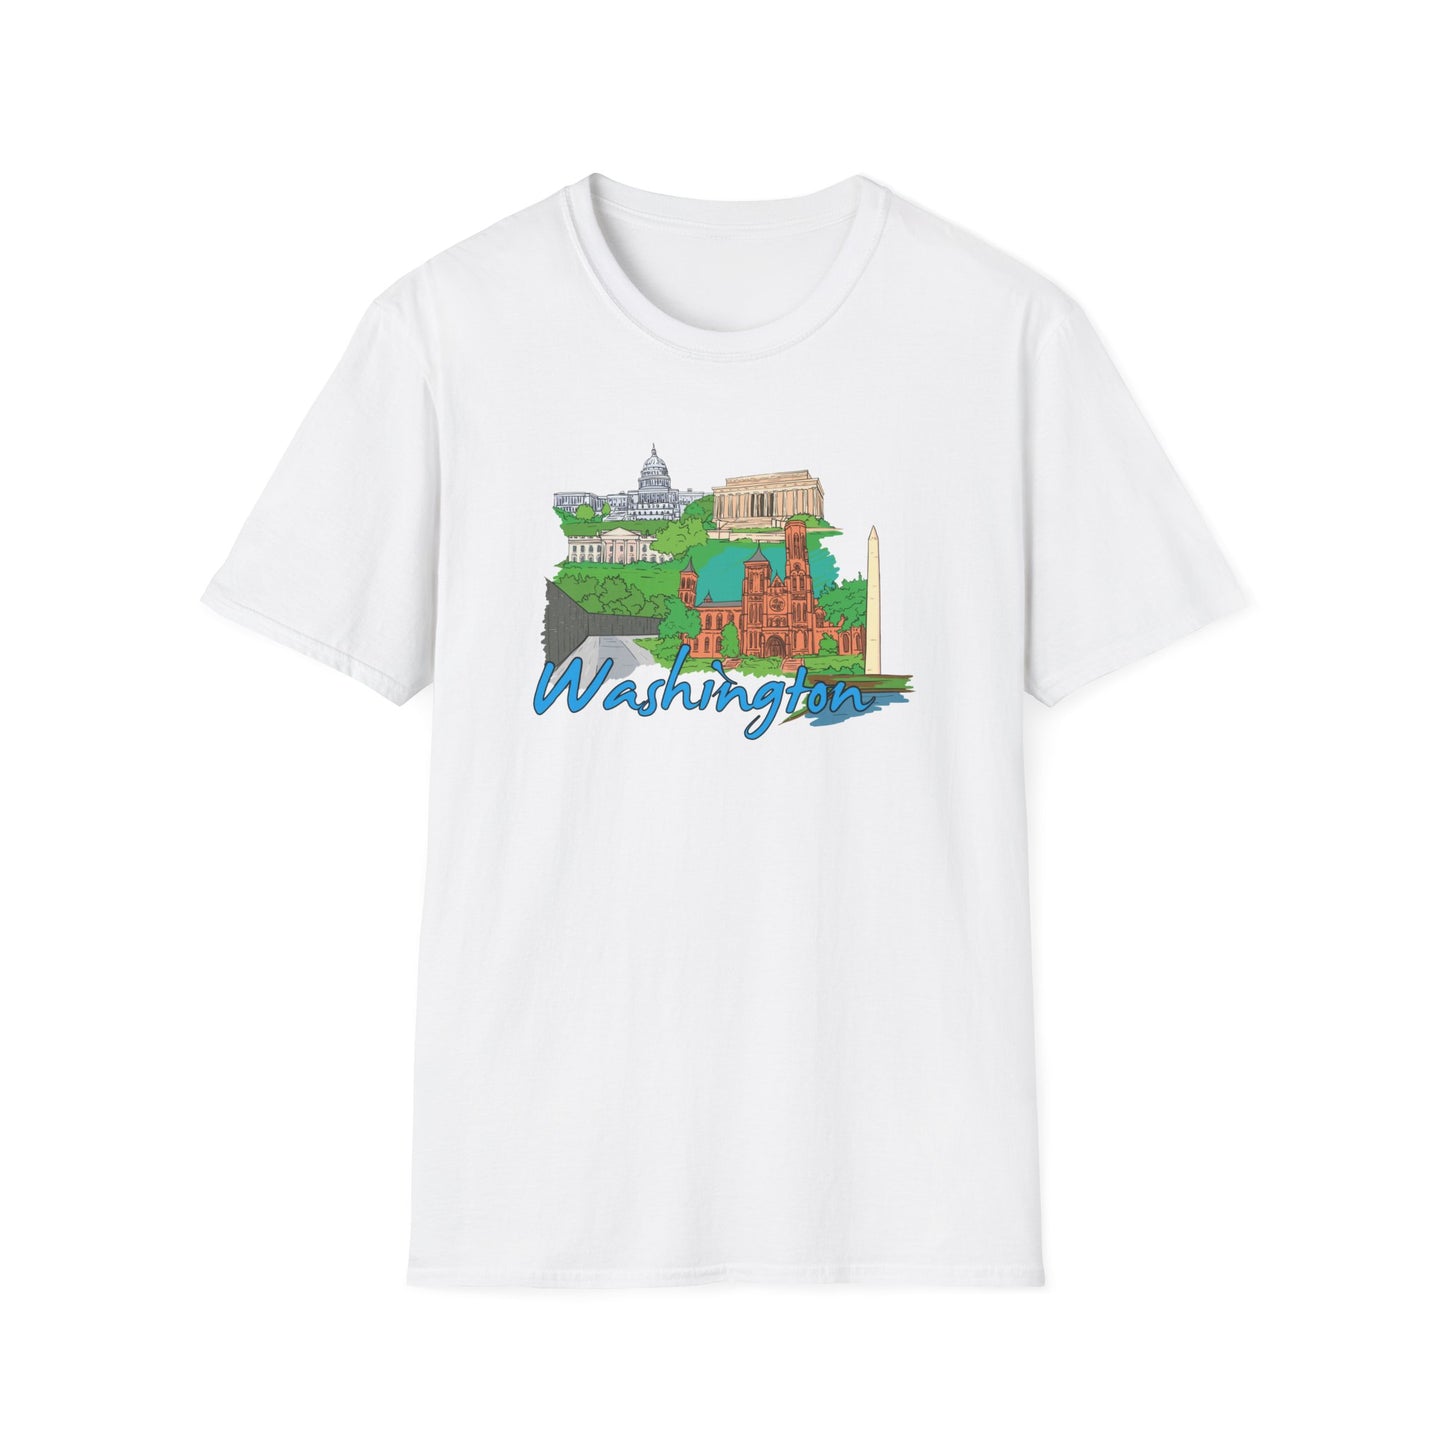 Washington T-Shirt - Perfect Blend of Comfort and Patriotism!